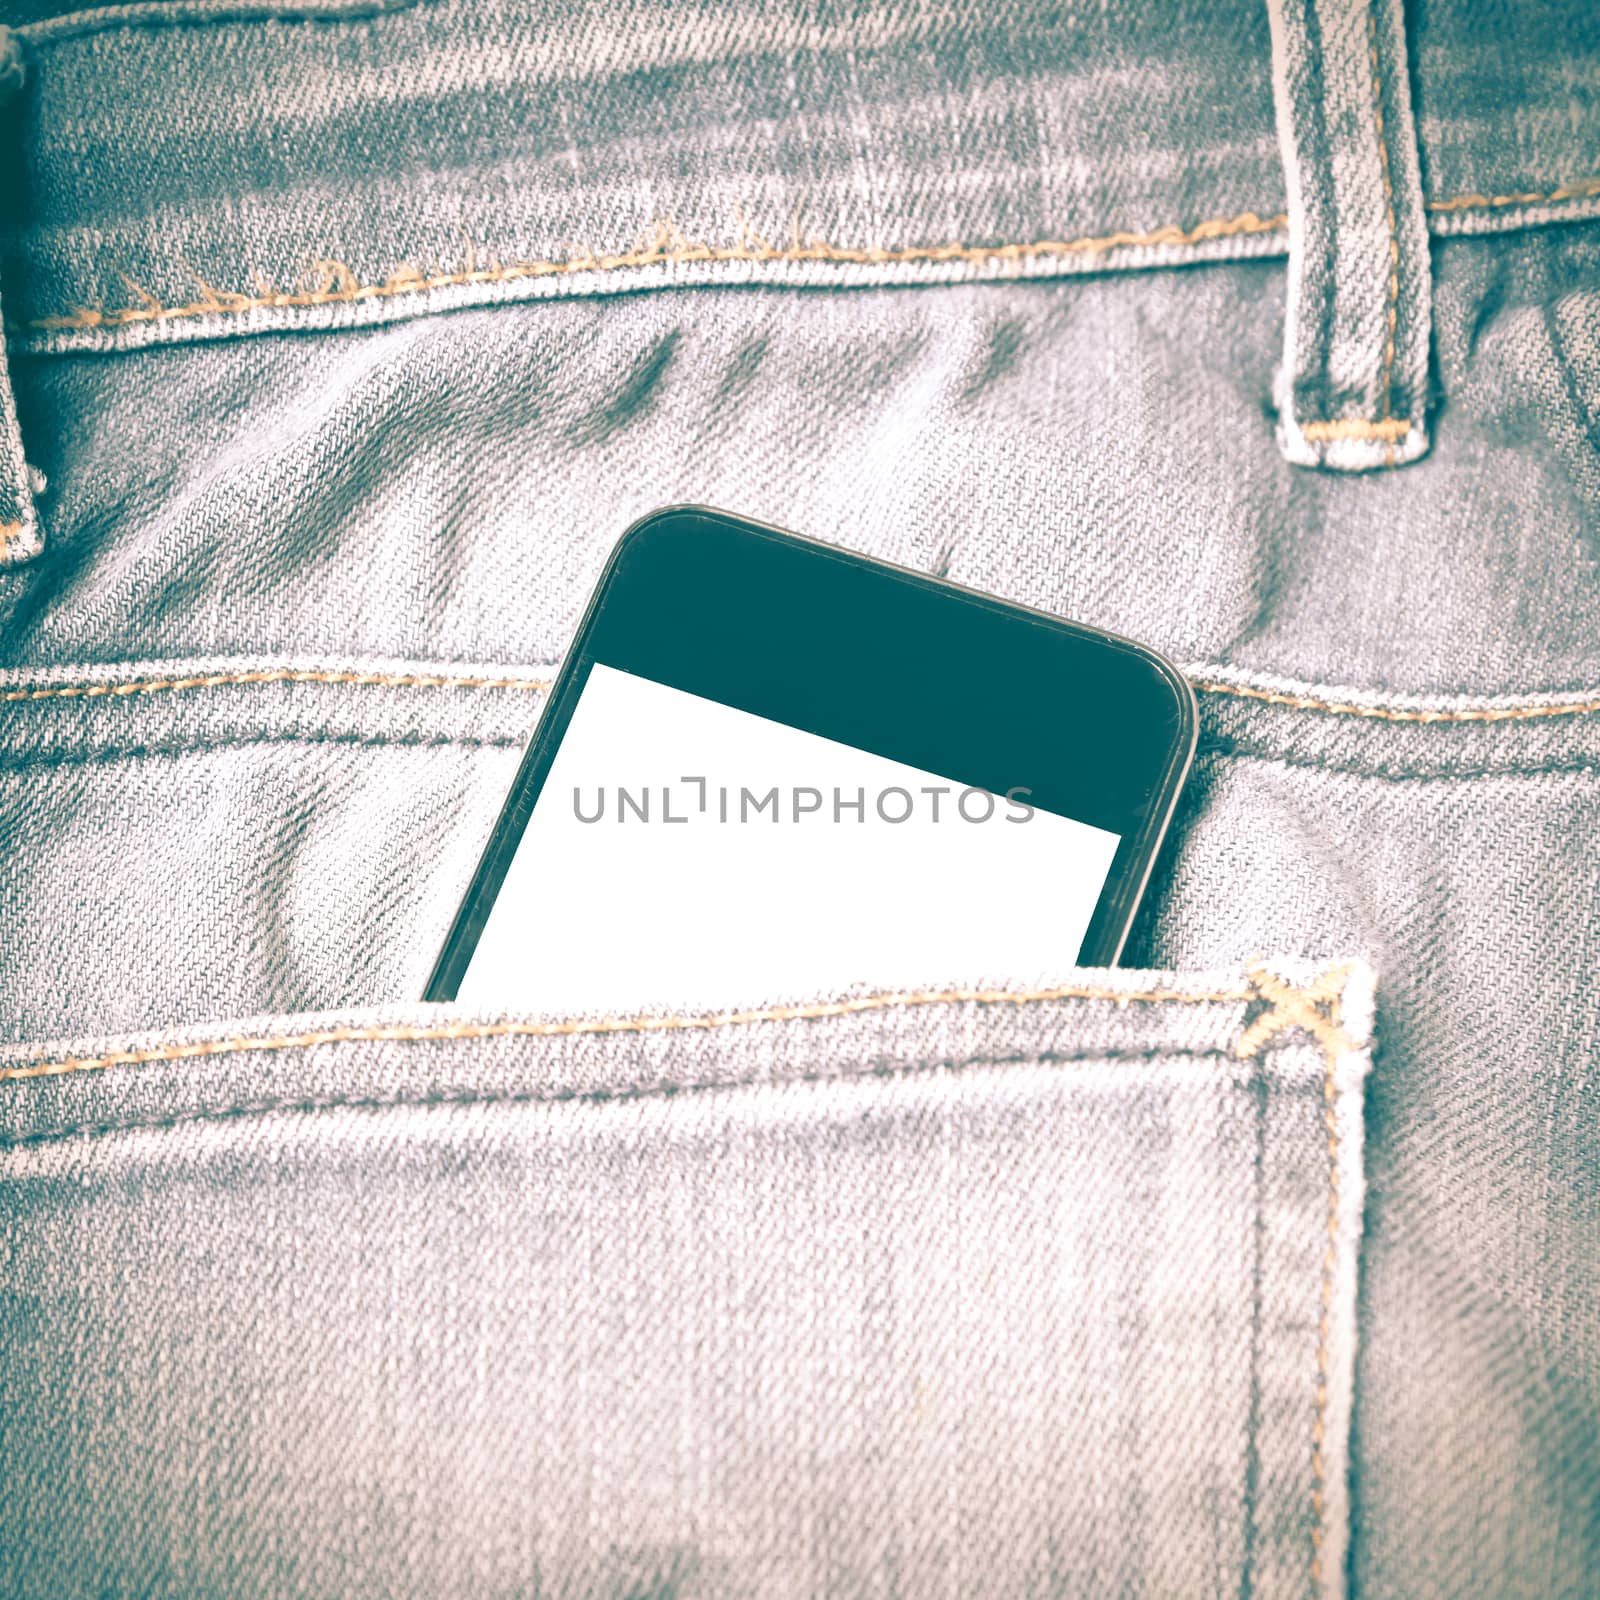 smart phone in jean pocket pants retro vintage style